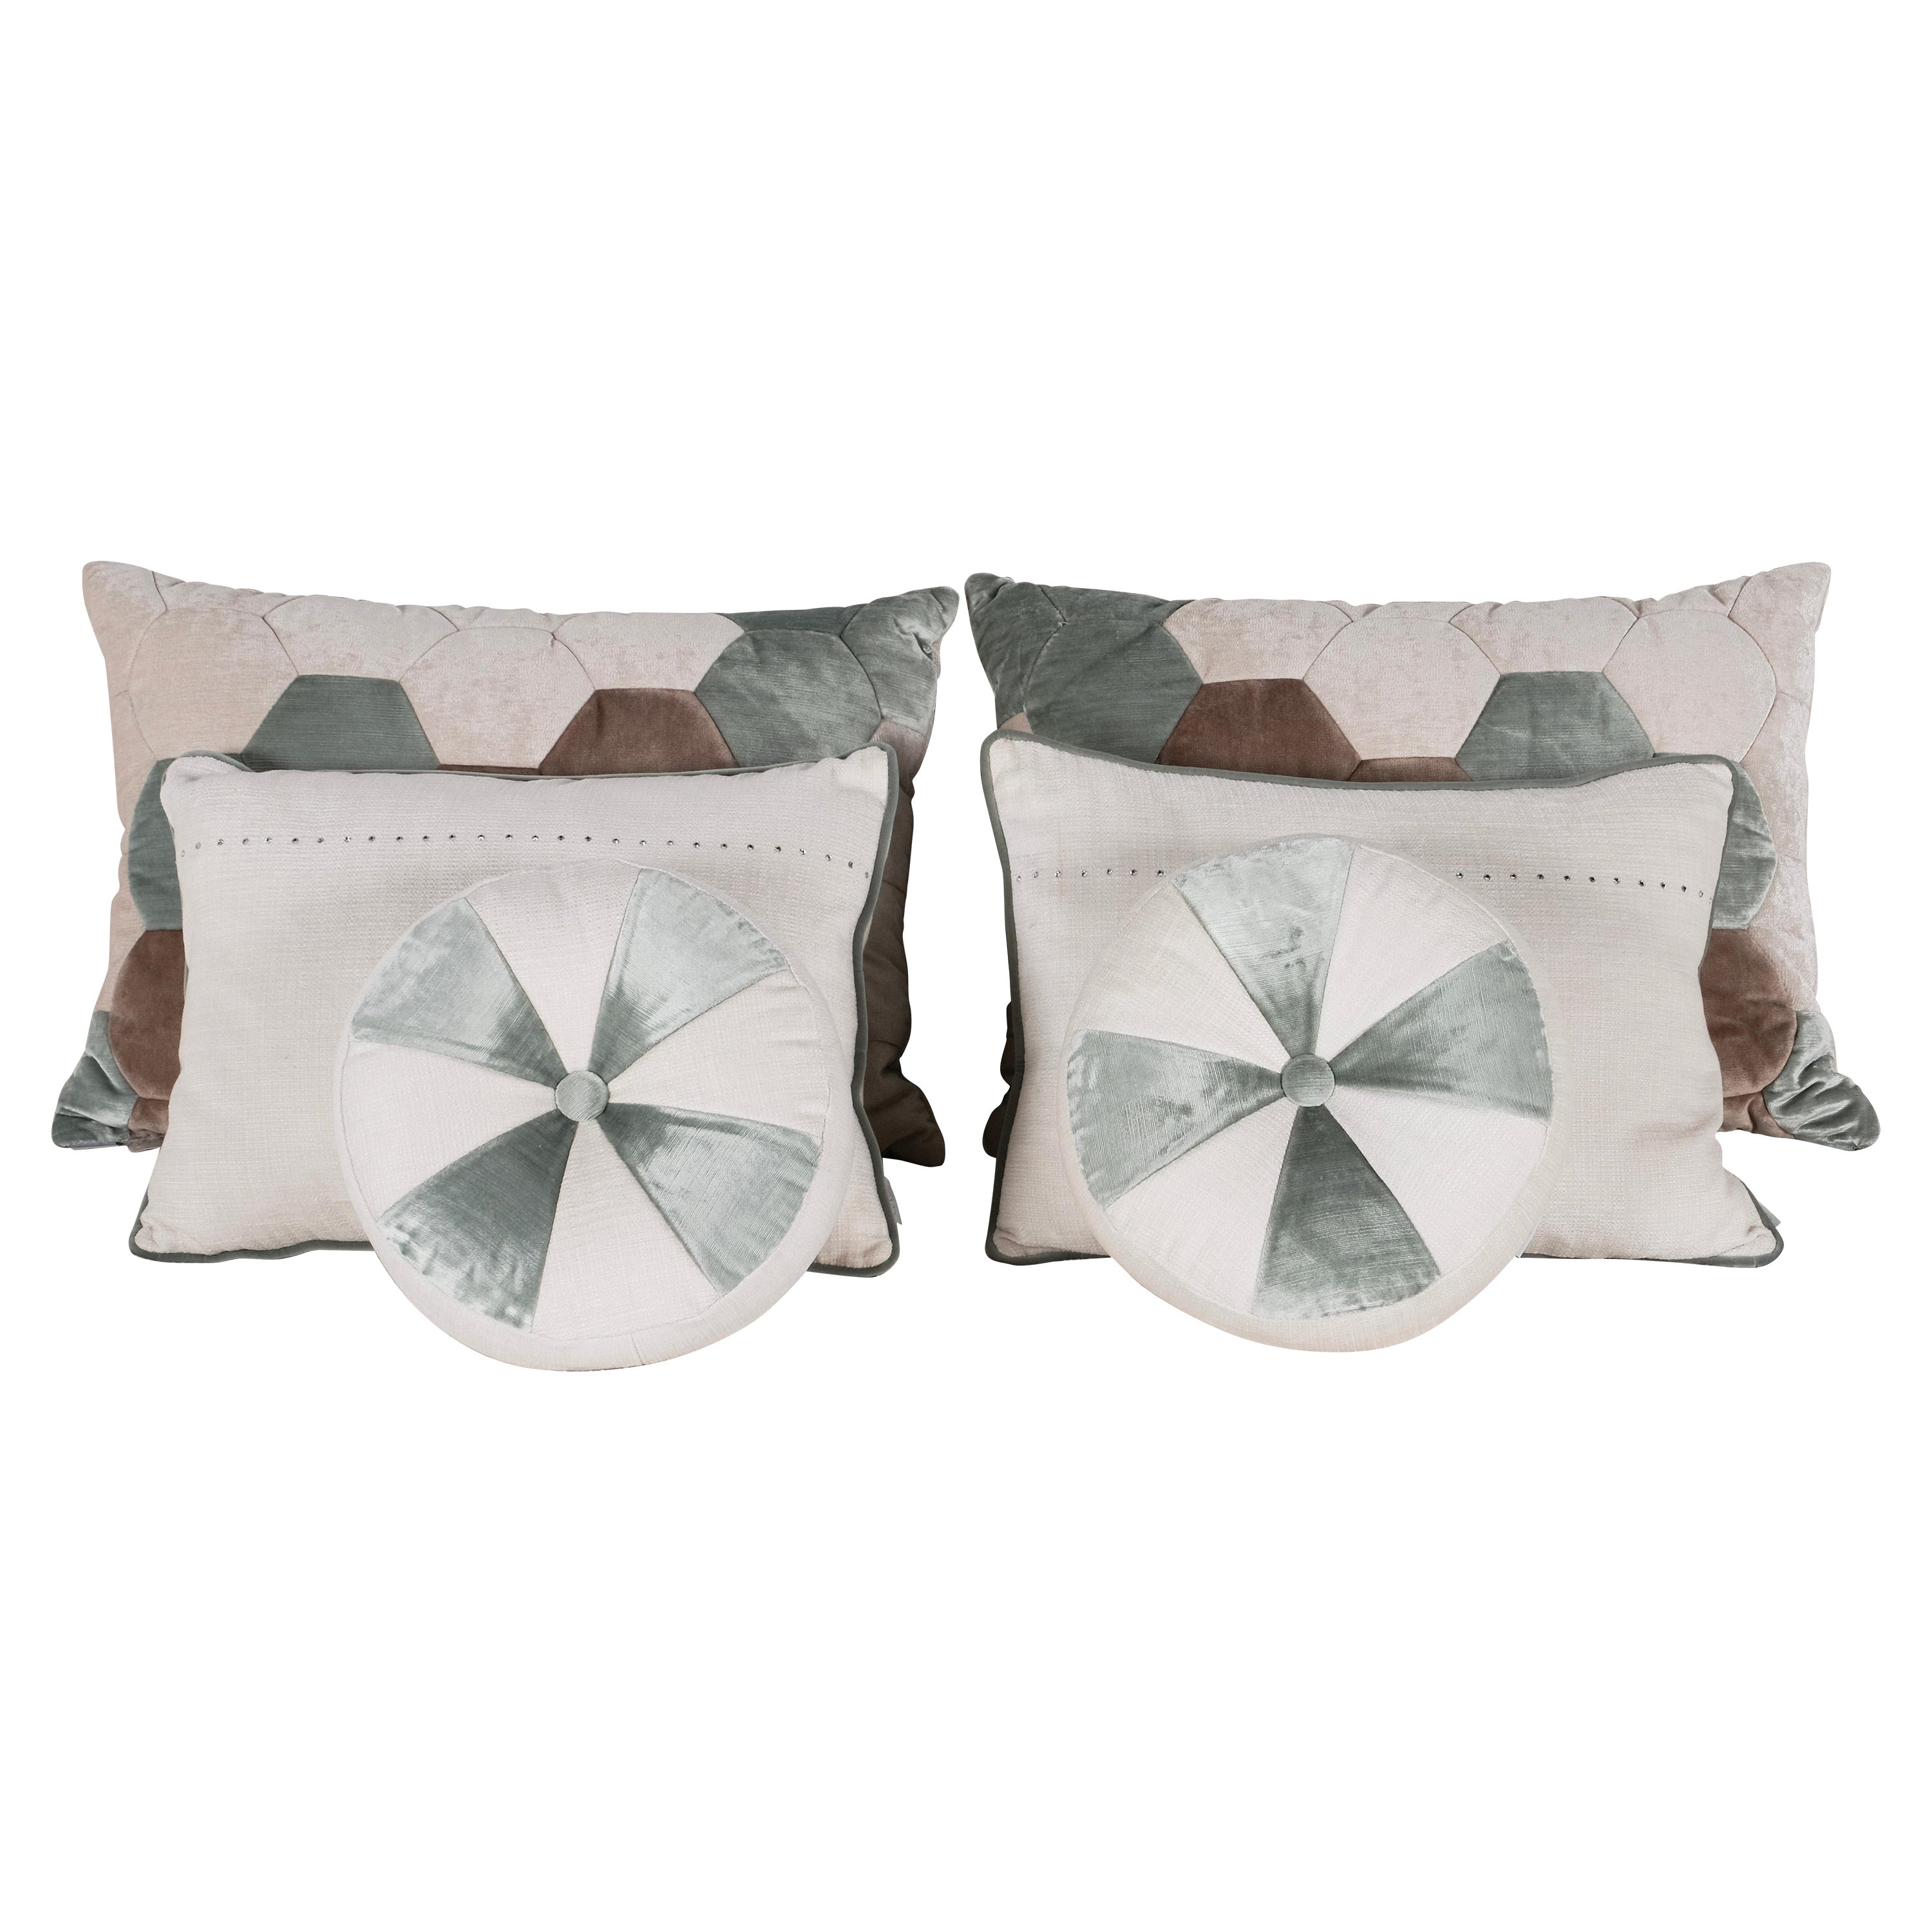 Set of 6 Decorative Pillows Cream Mint Green and White Lace Swarovski Lusitanus